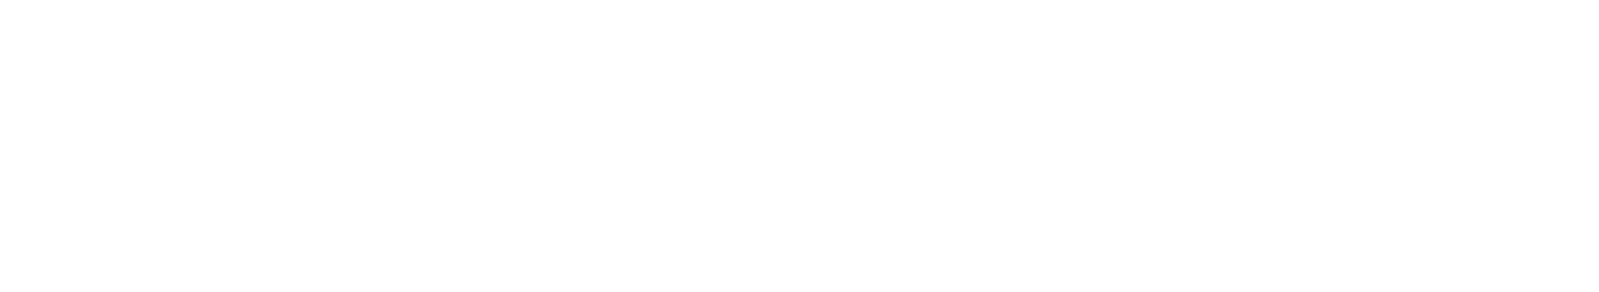 Petro Rio Logo groß für dunkle Hintergründe (transparentes PNG)